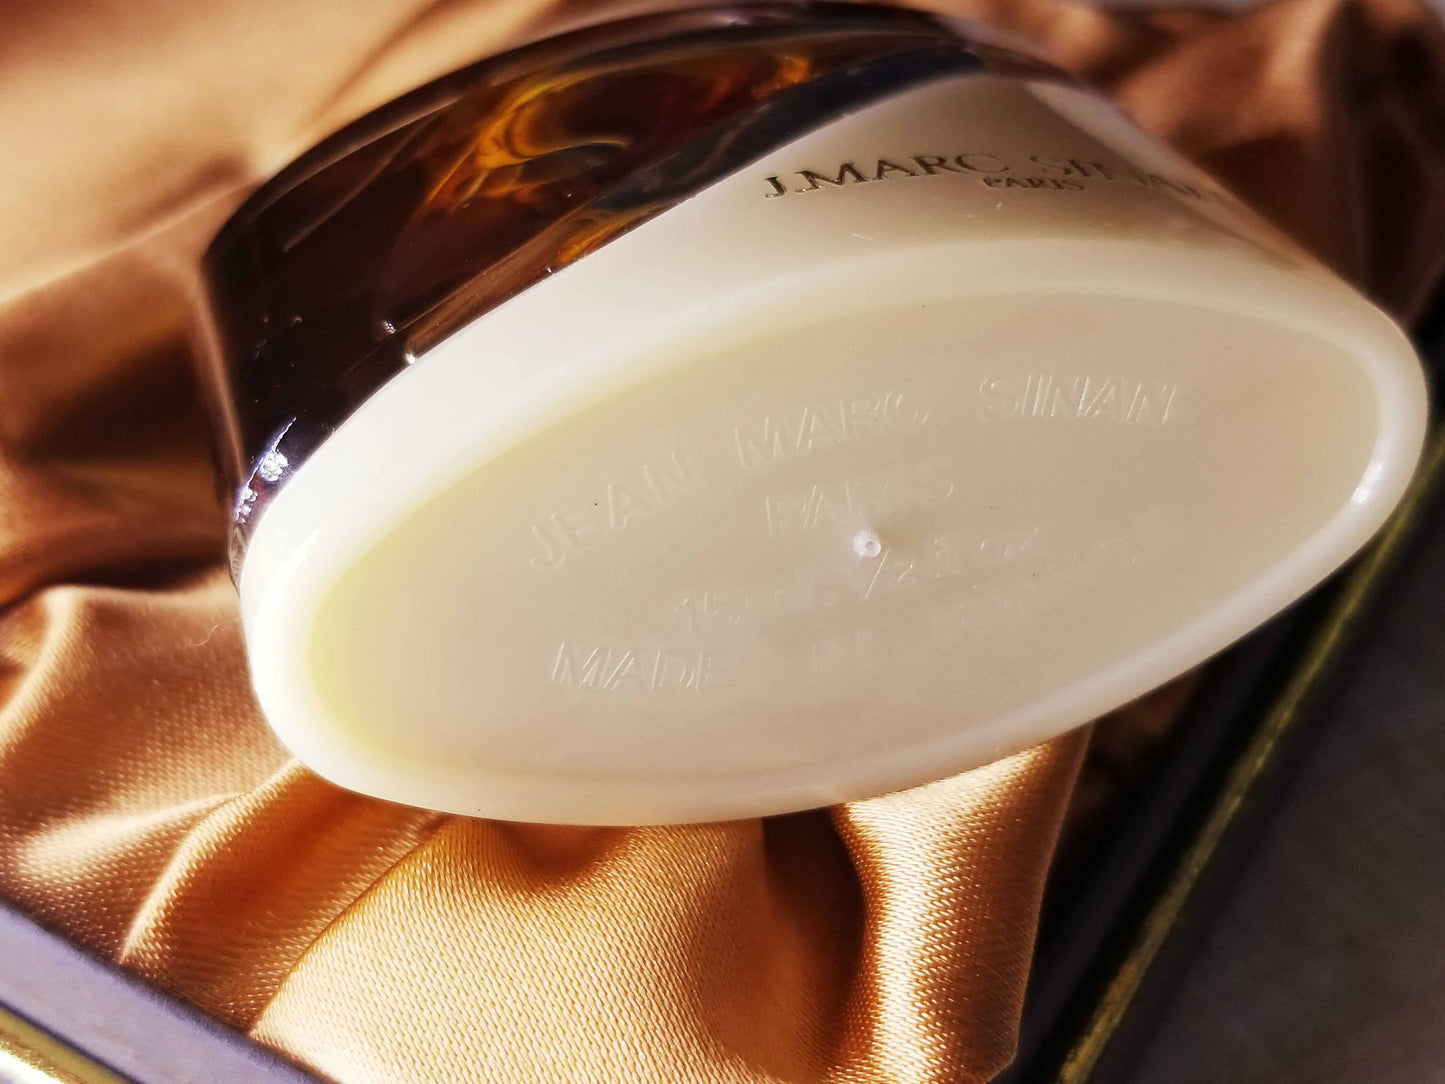 Sinan Jean-Marc Sinan for women Pure Parfum Splash 30 ml 1 oz Or 15 ml 1/2 oz OR 7.5 ml 1/4 oz, Vintage, Rare